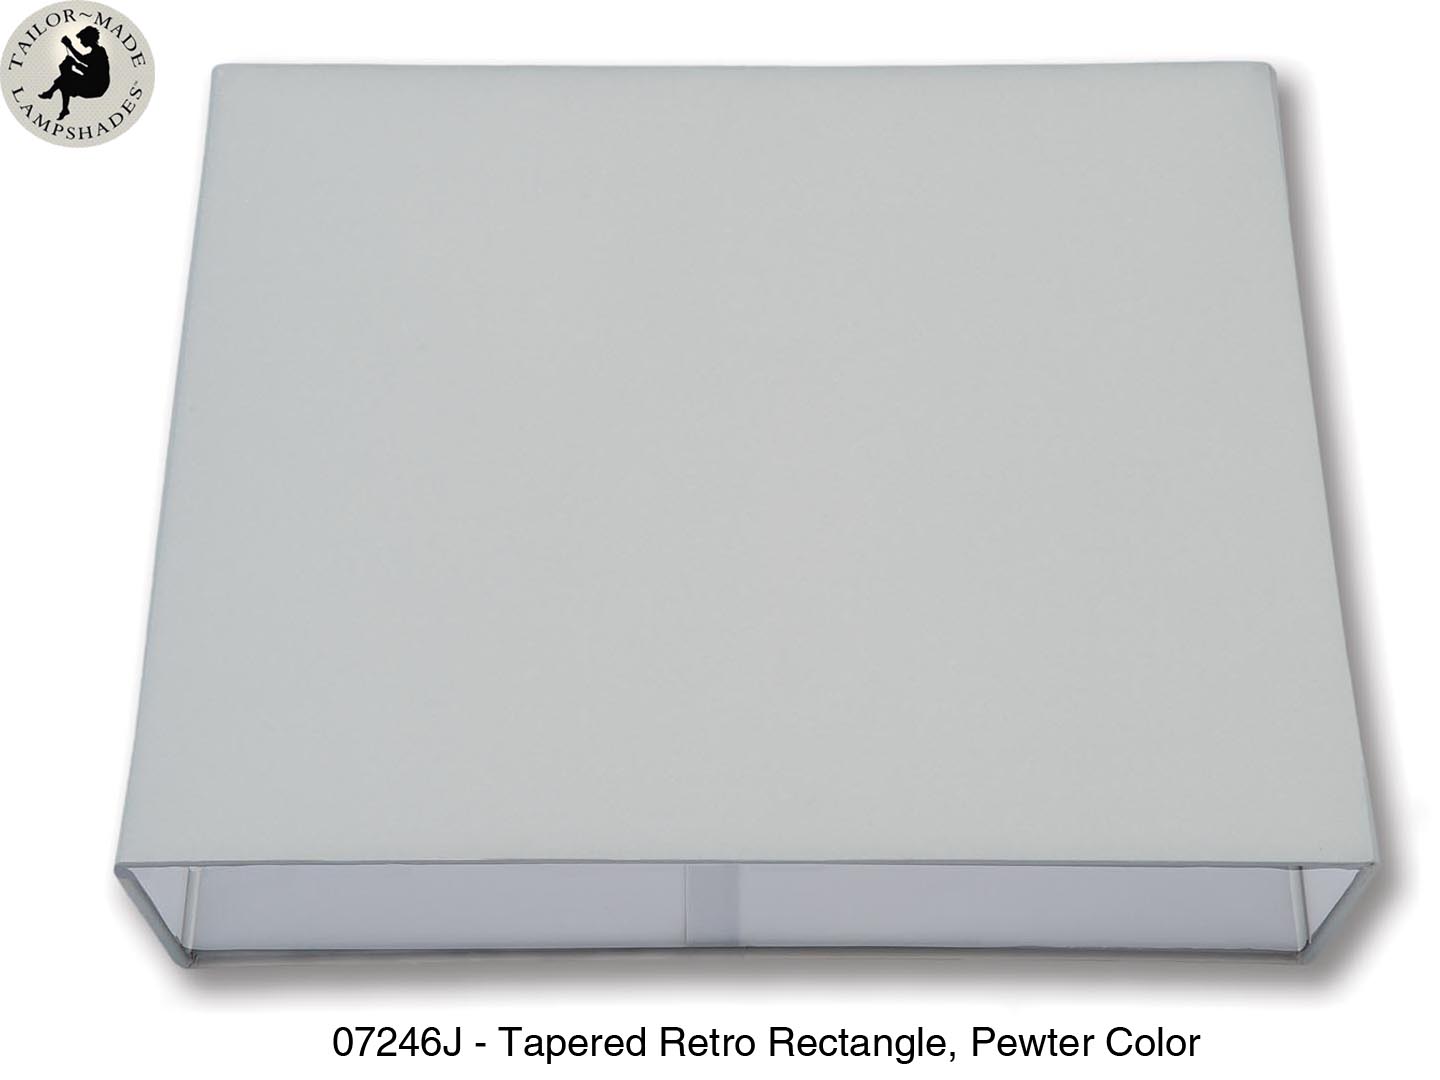 Tapered Retro Rectangle Hardback Shades - Ivory Color, Microfiber Chiffon